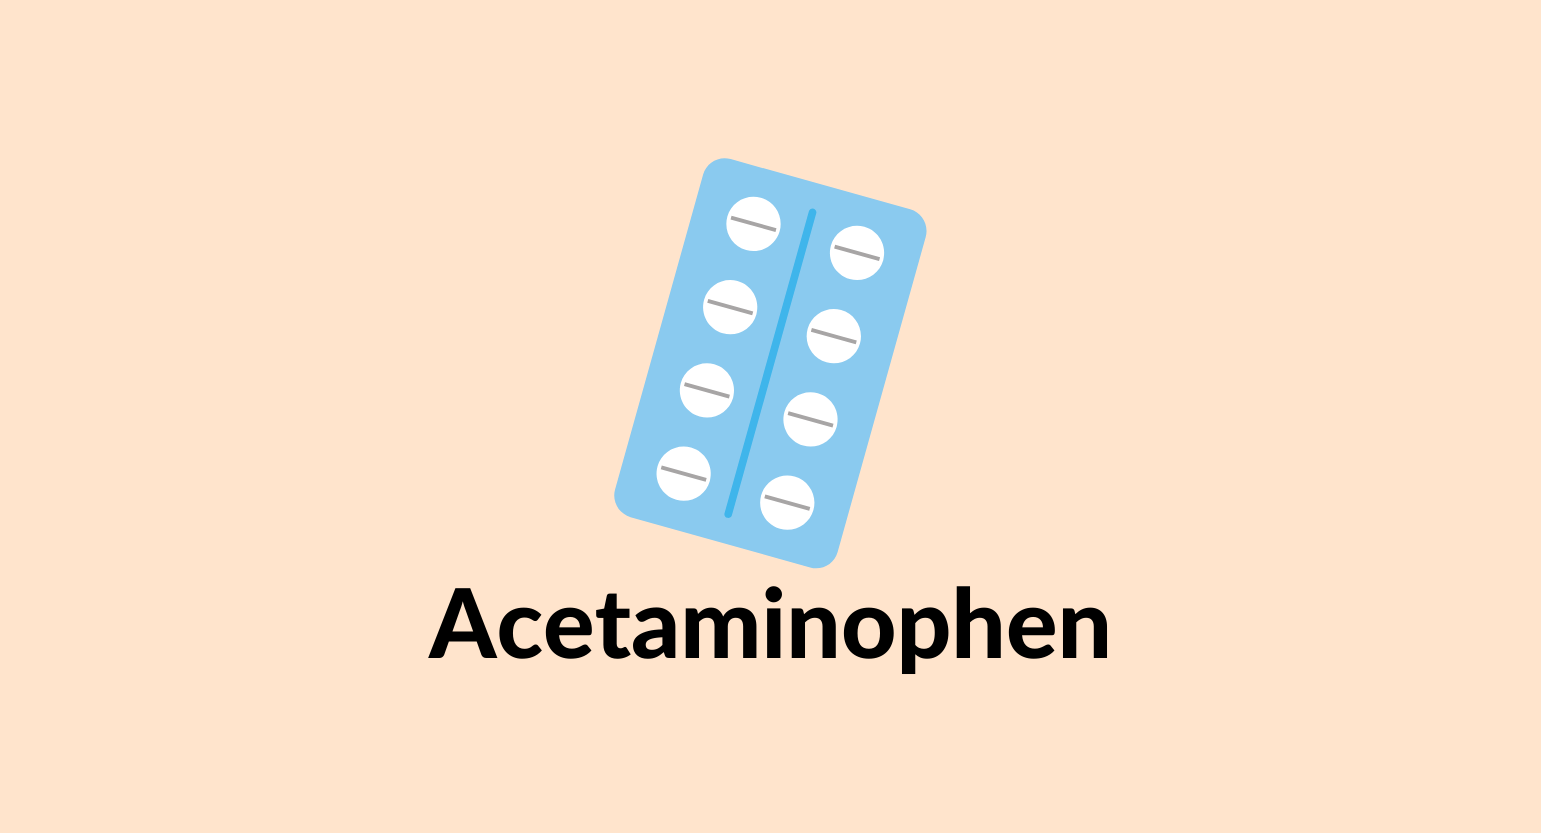 Acetaminophen illustration